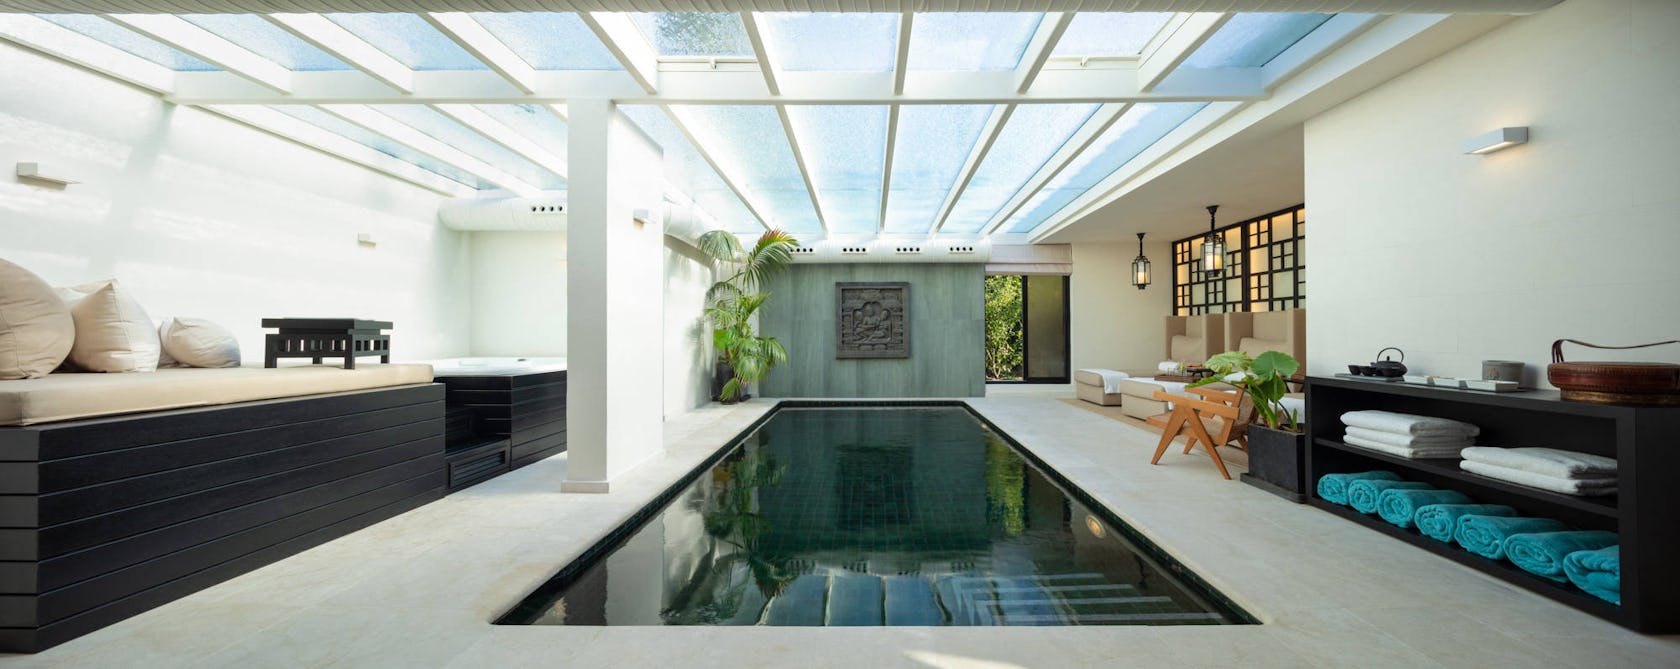 pool water swimming pool building architecture window interior design indoors